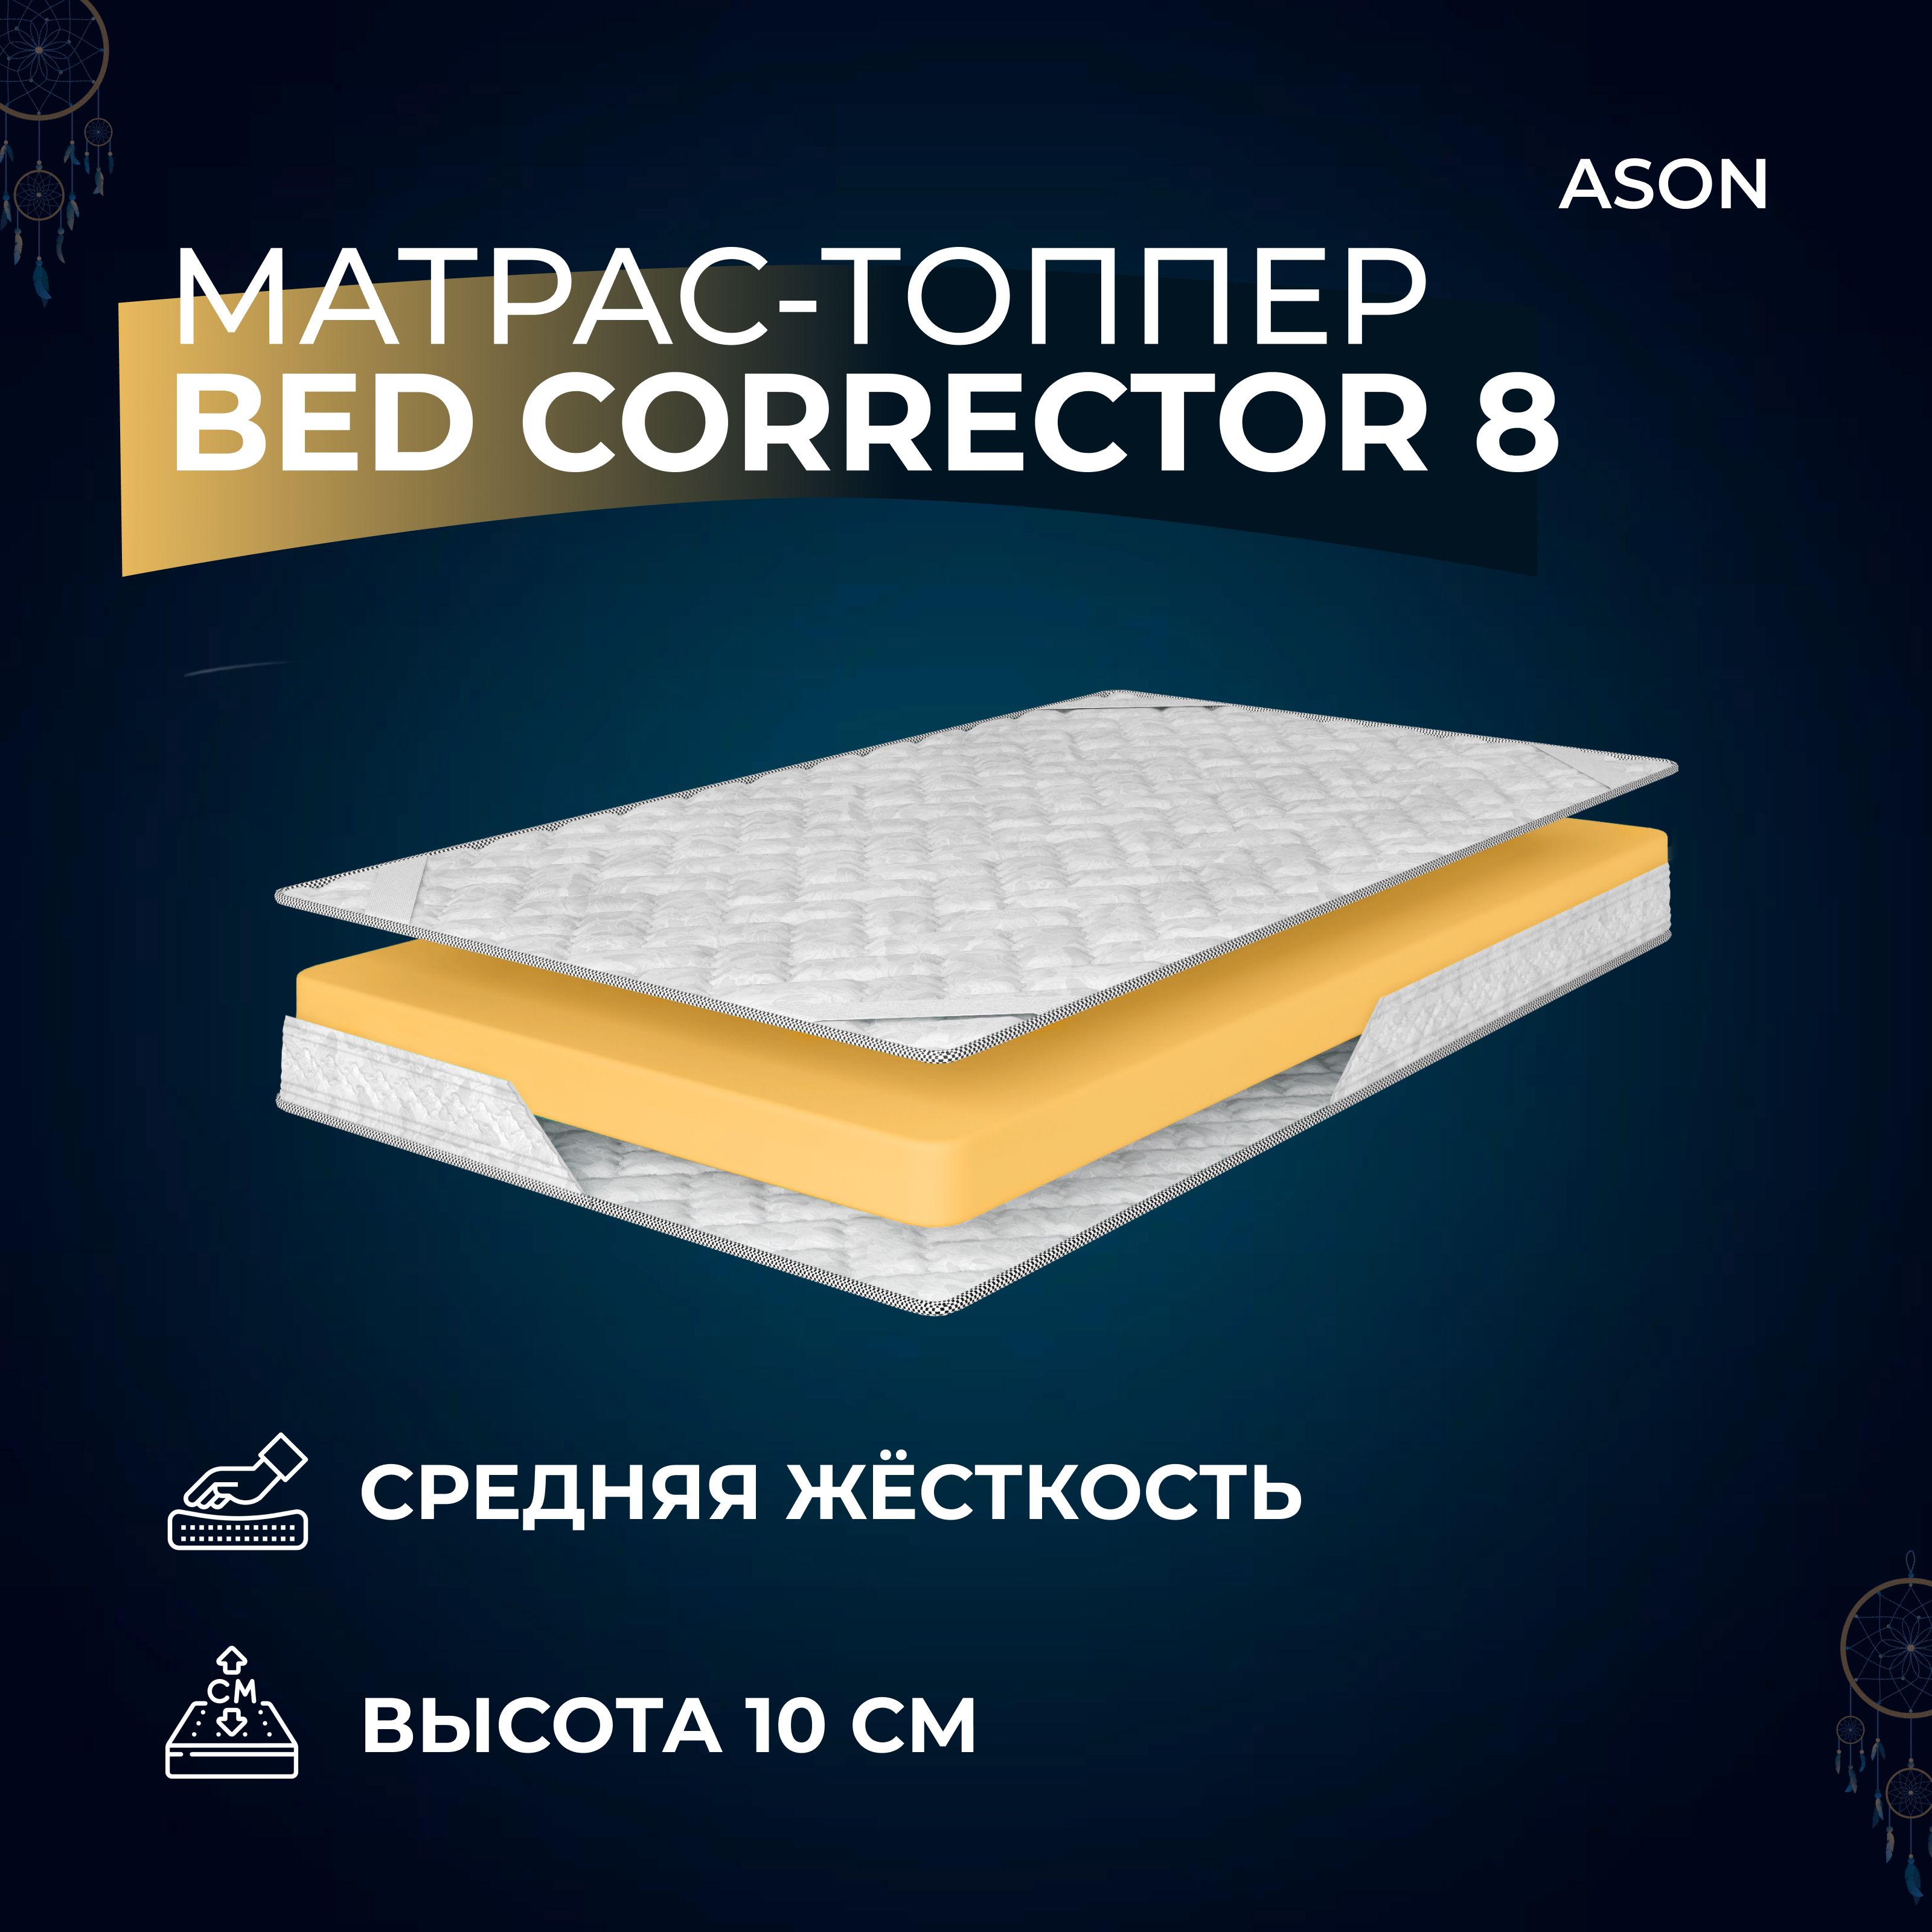 Матрас-топпер 85х200 Ason, Bed corrector 8